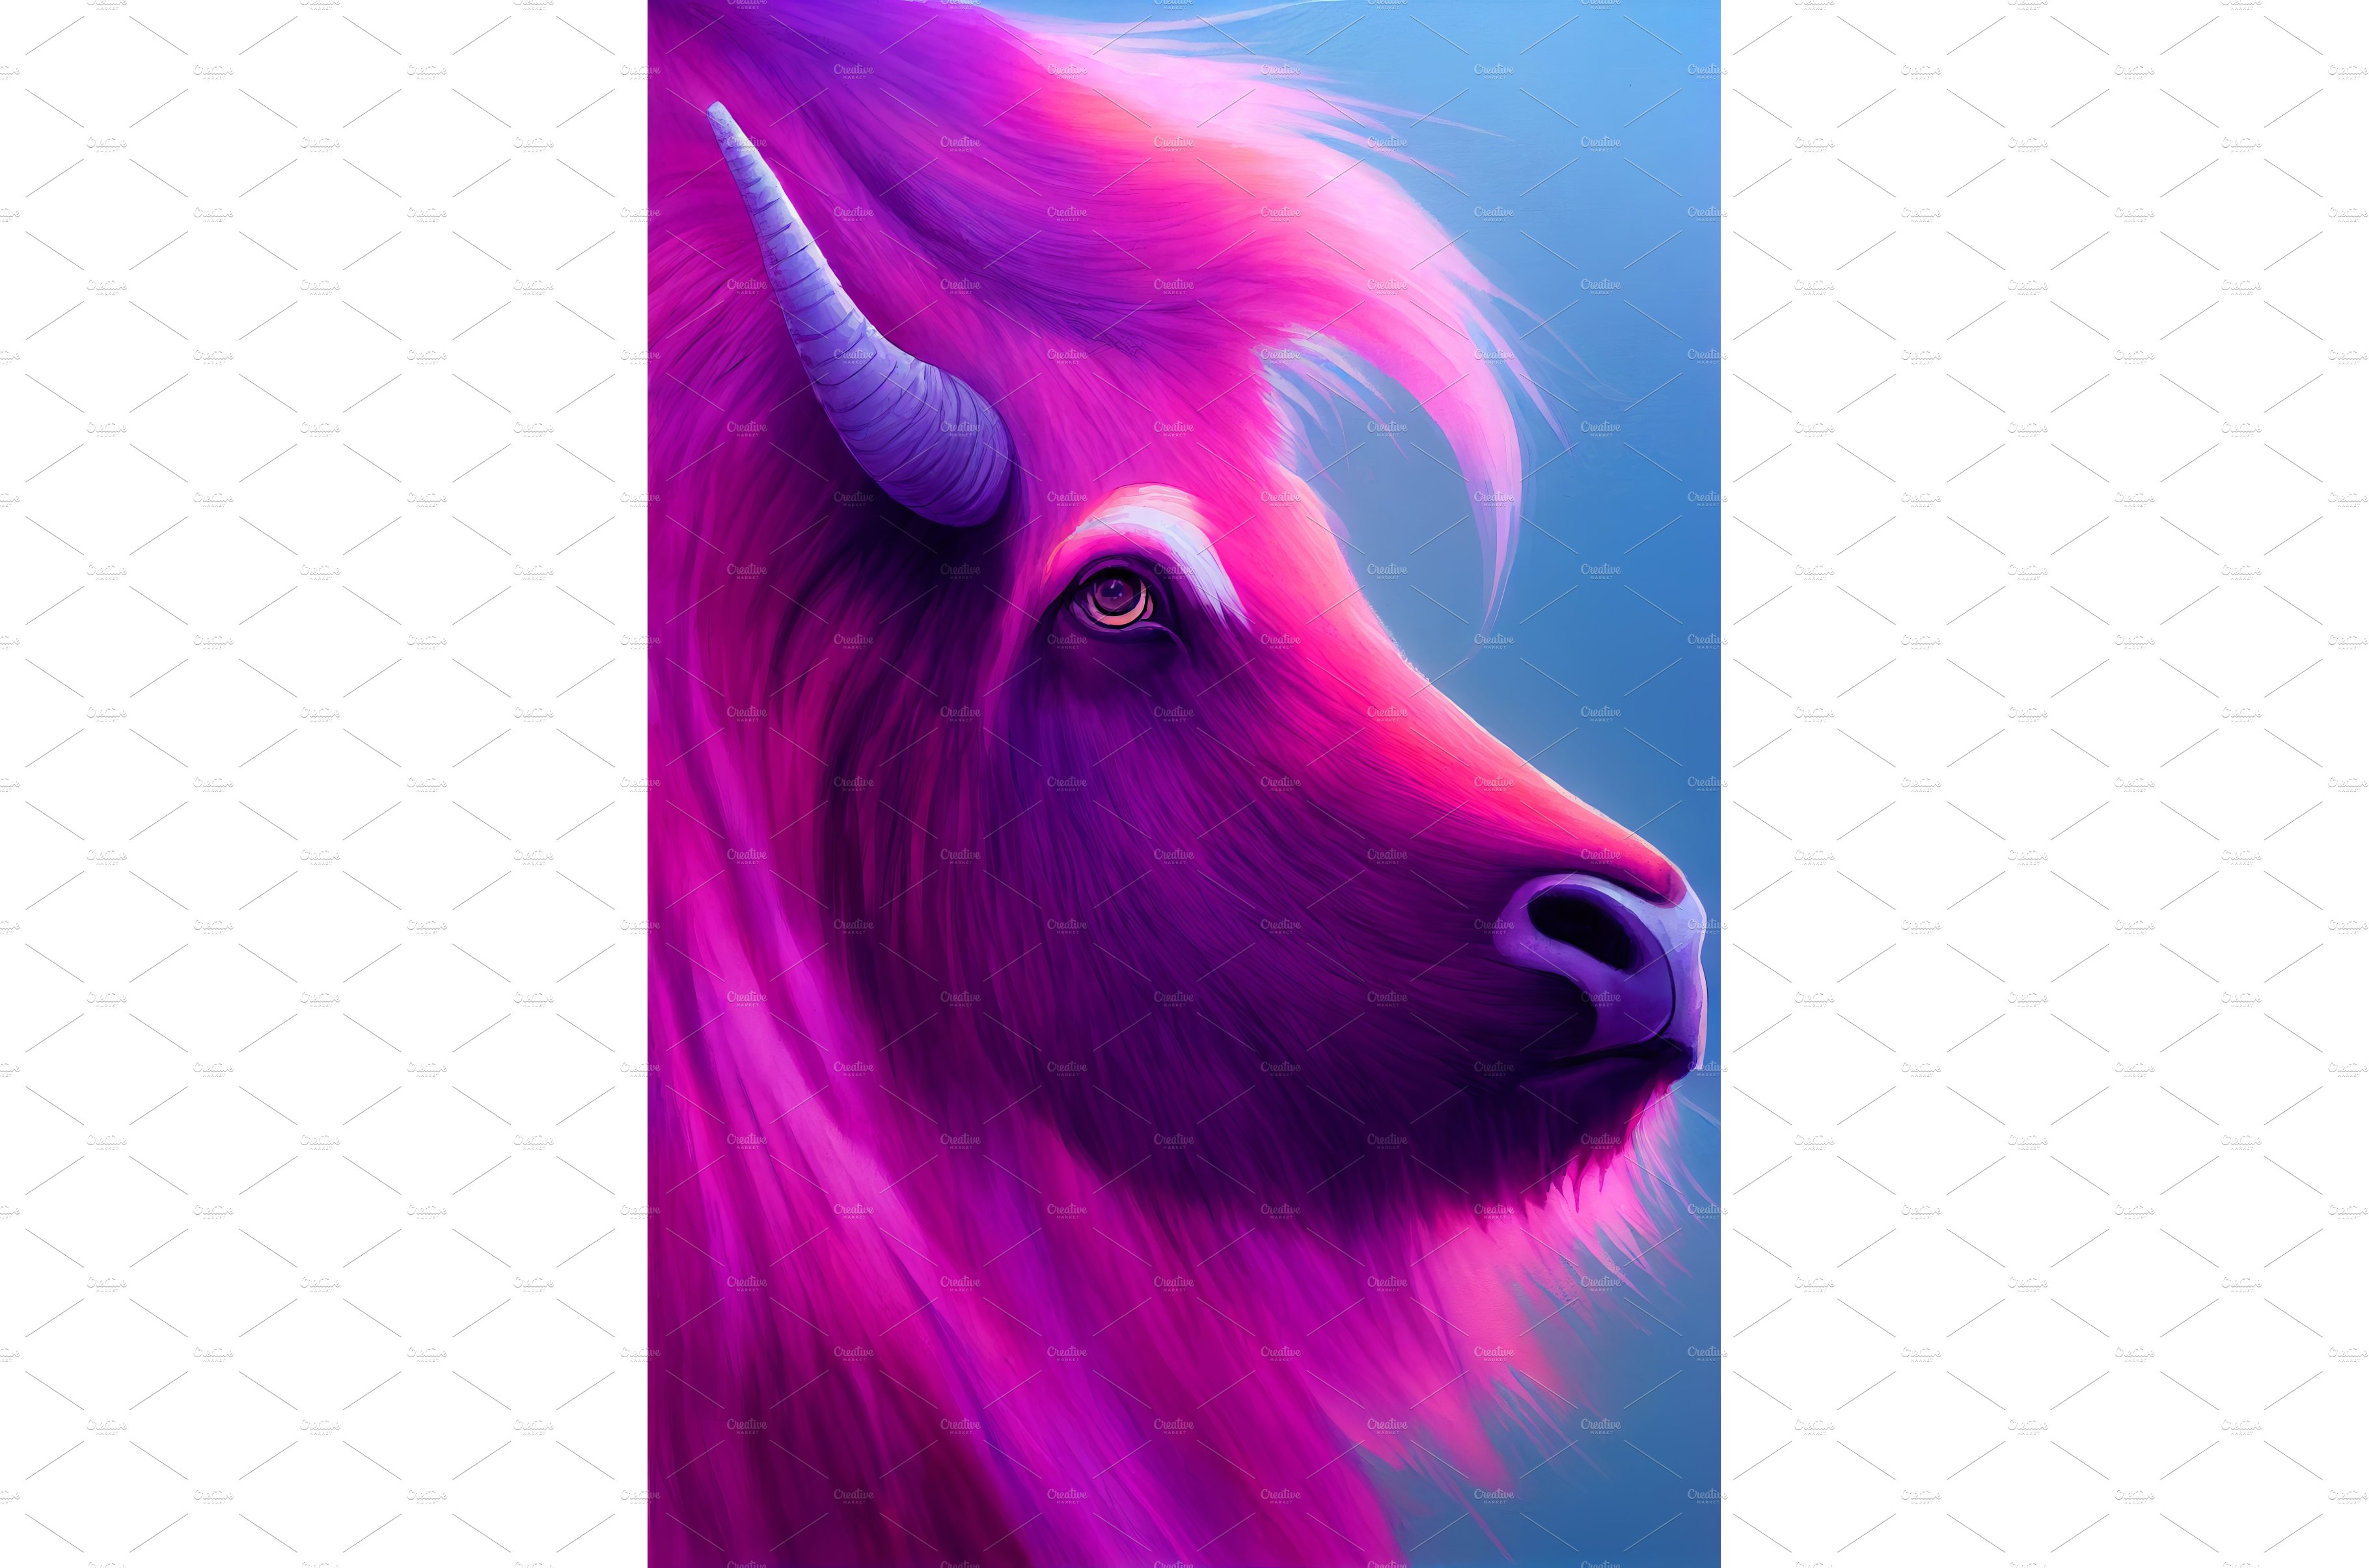 Watercolor portrait of cute yak cover image.